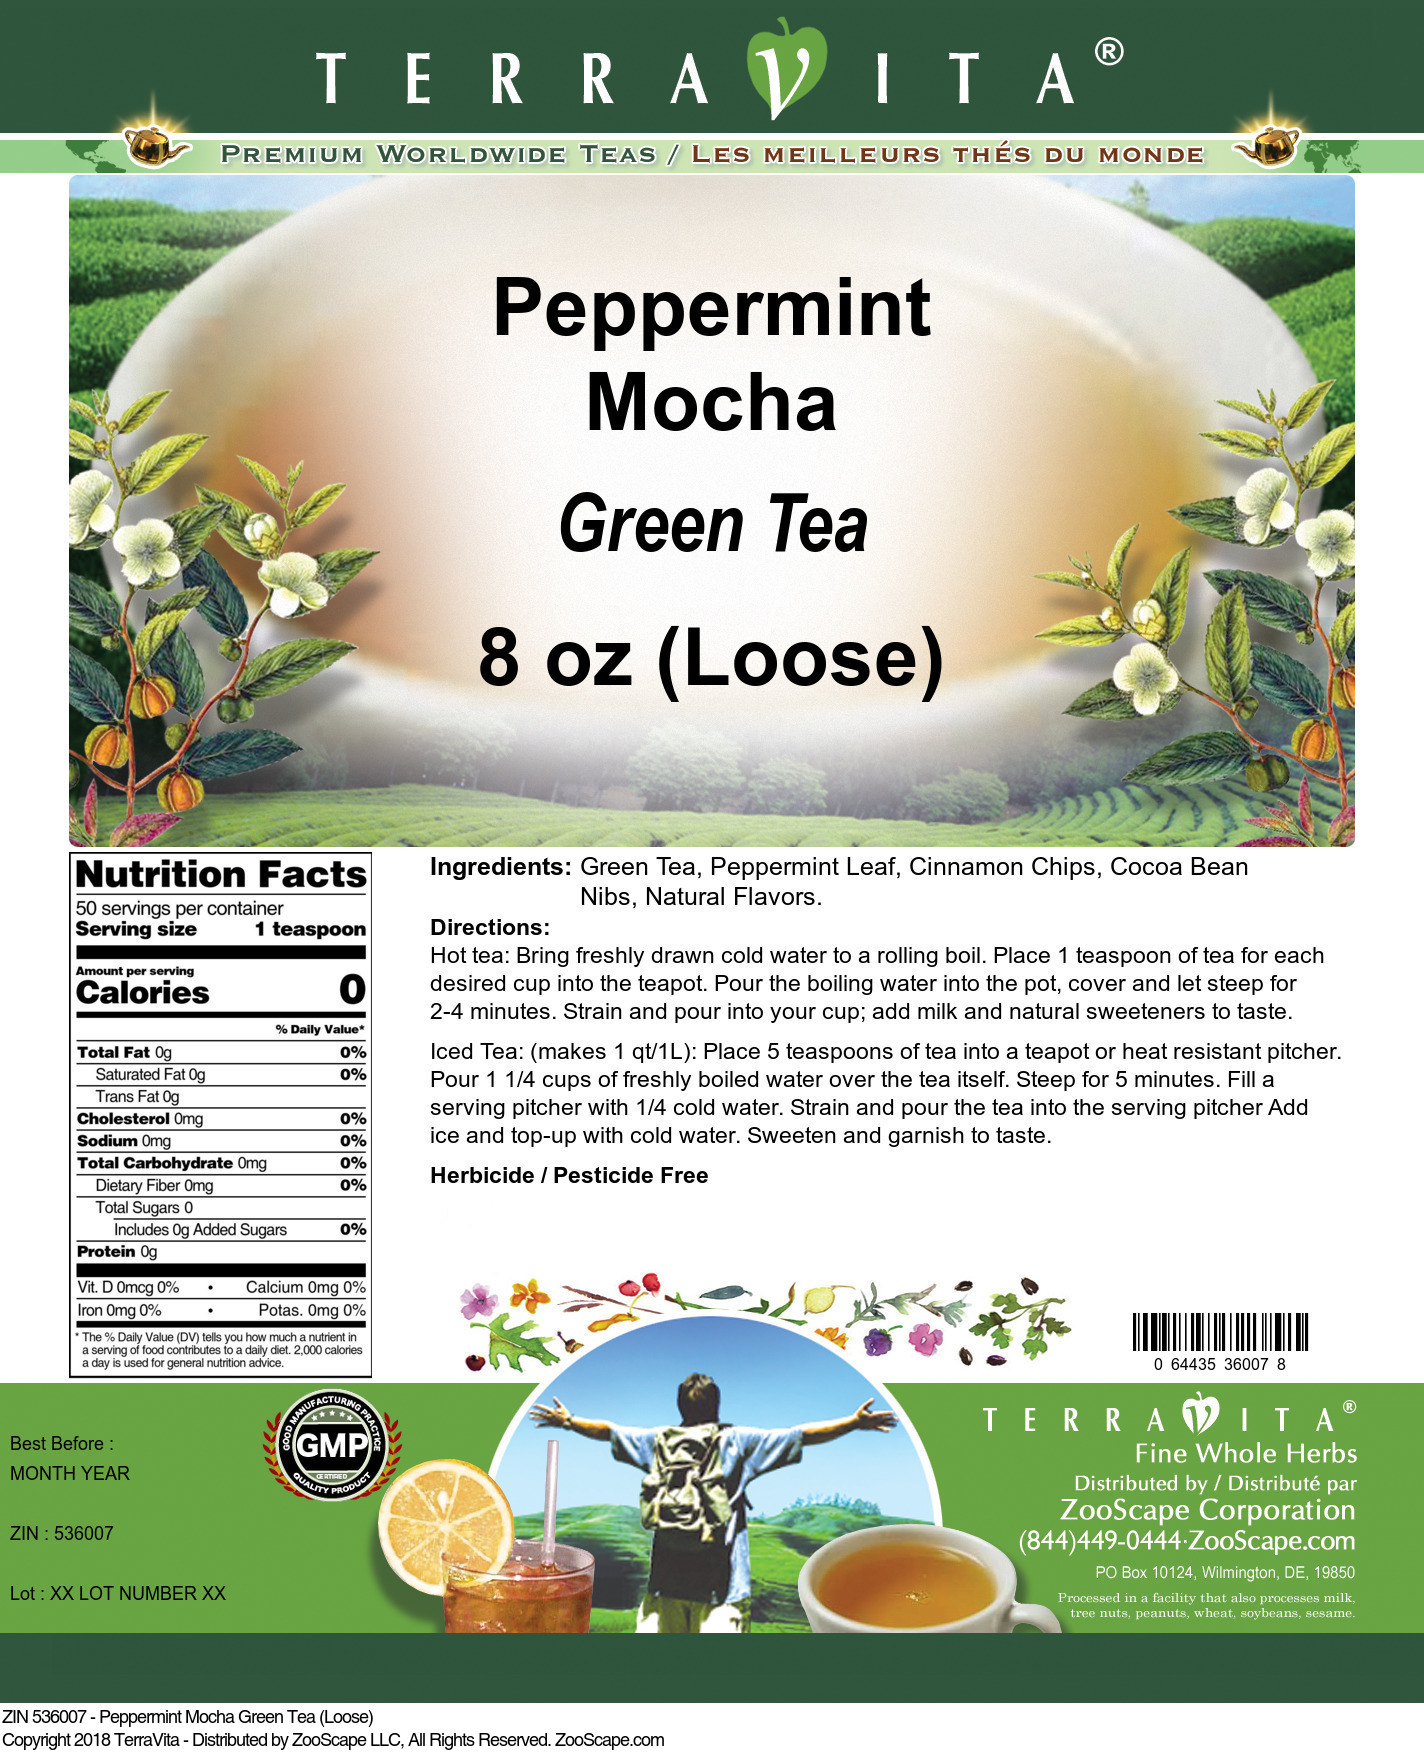 Peppermint Mocha Green Tea (Loose) - Label